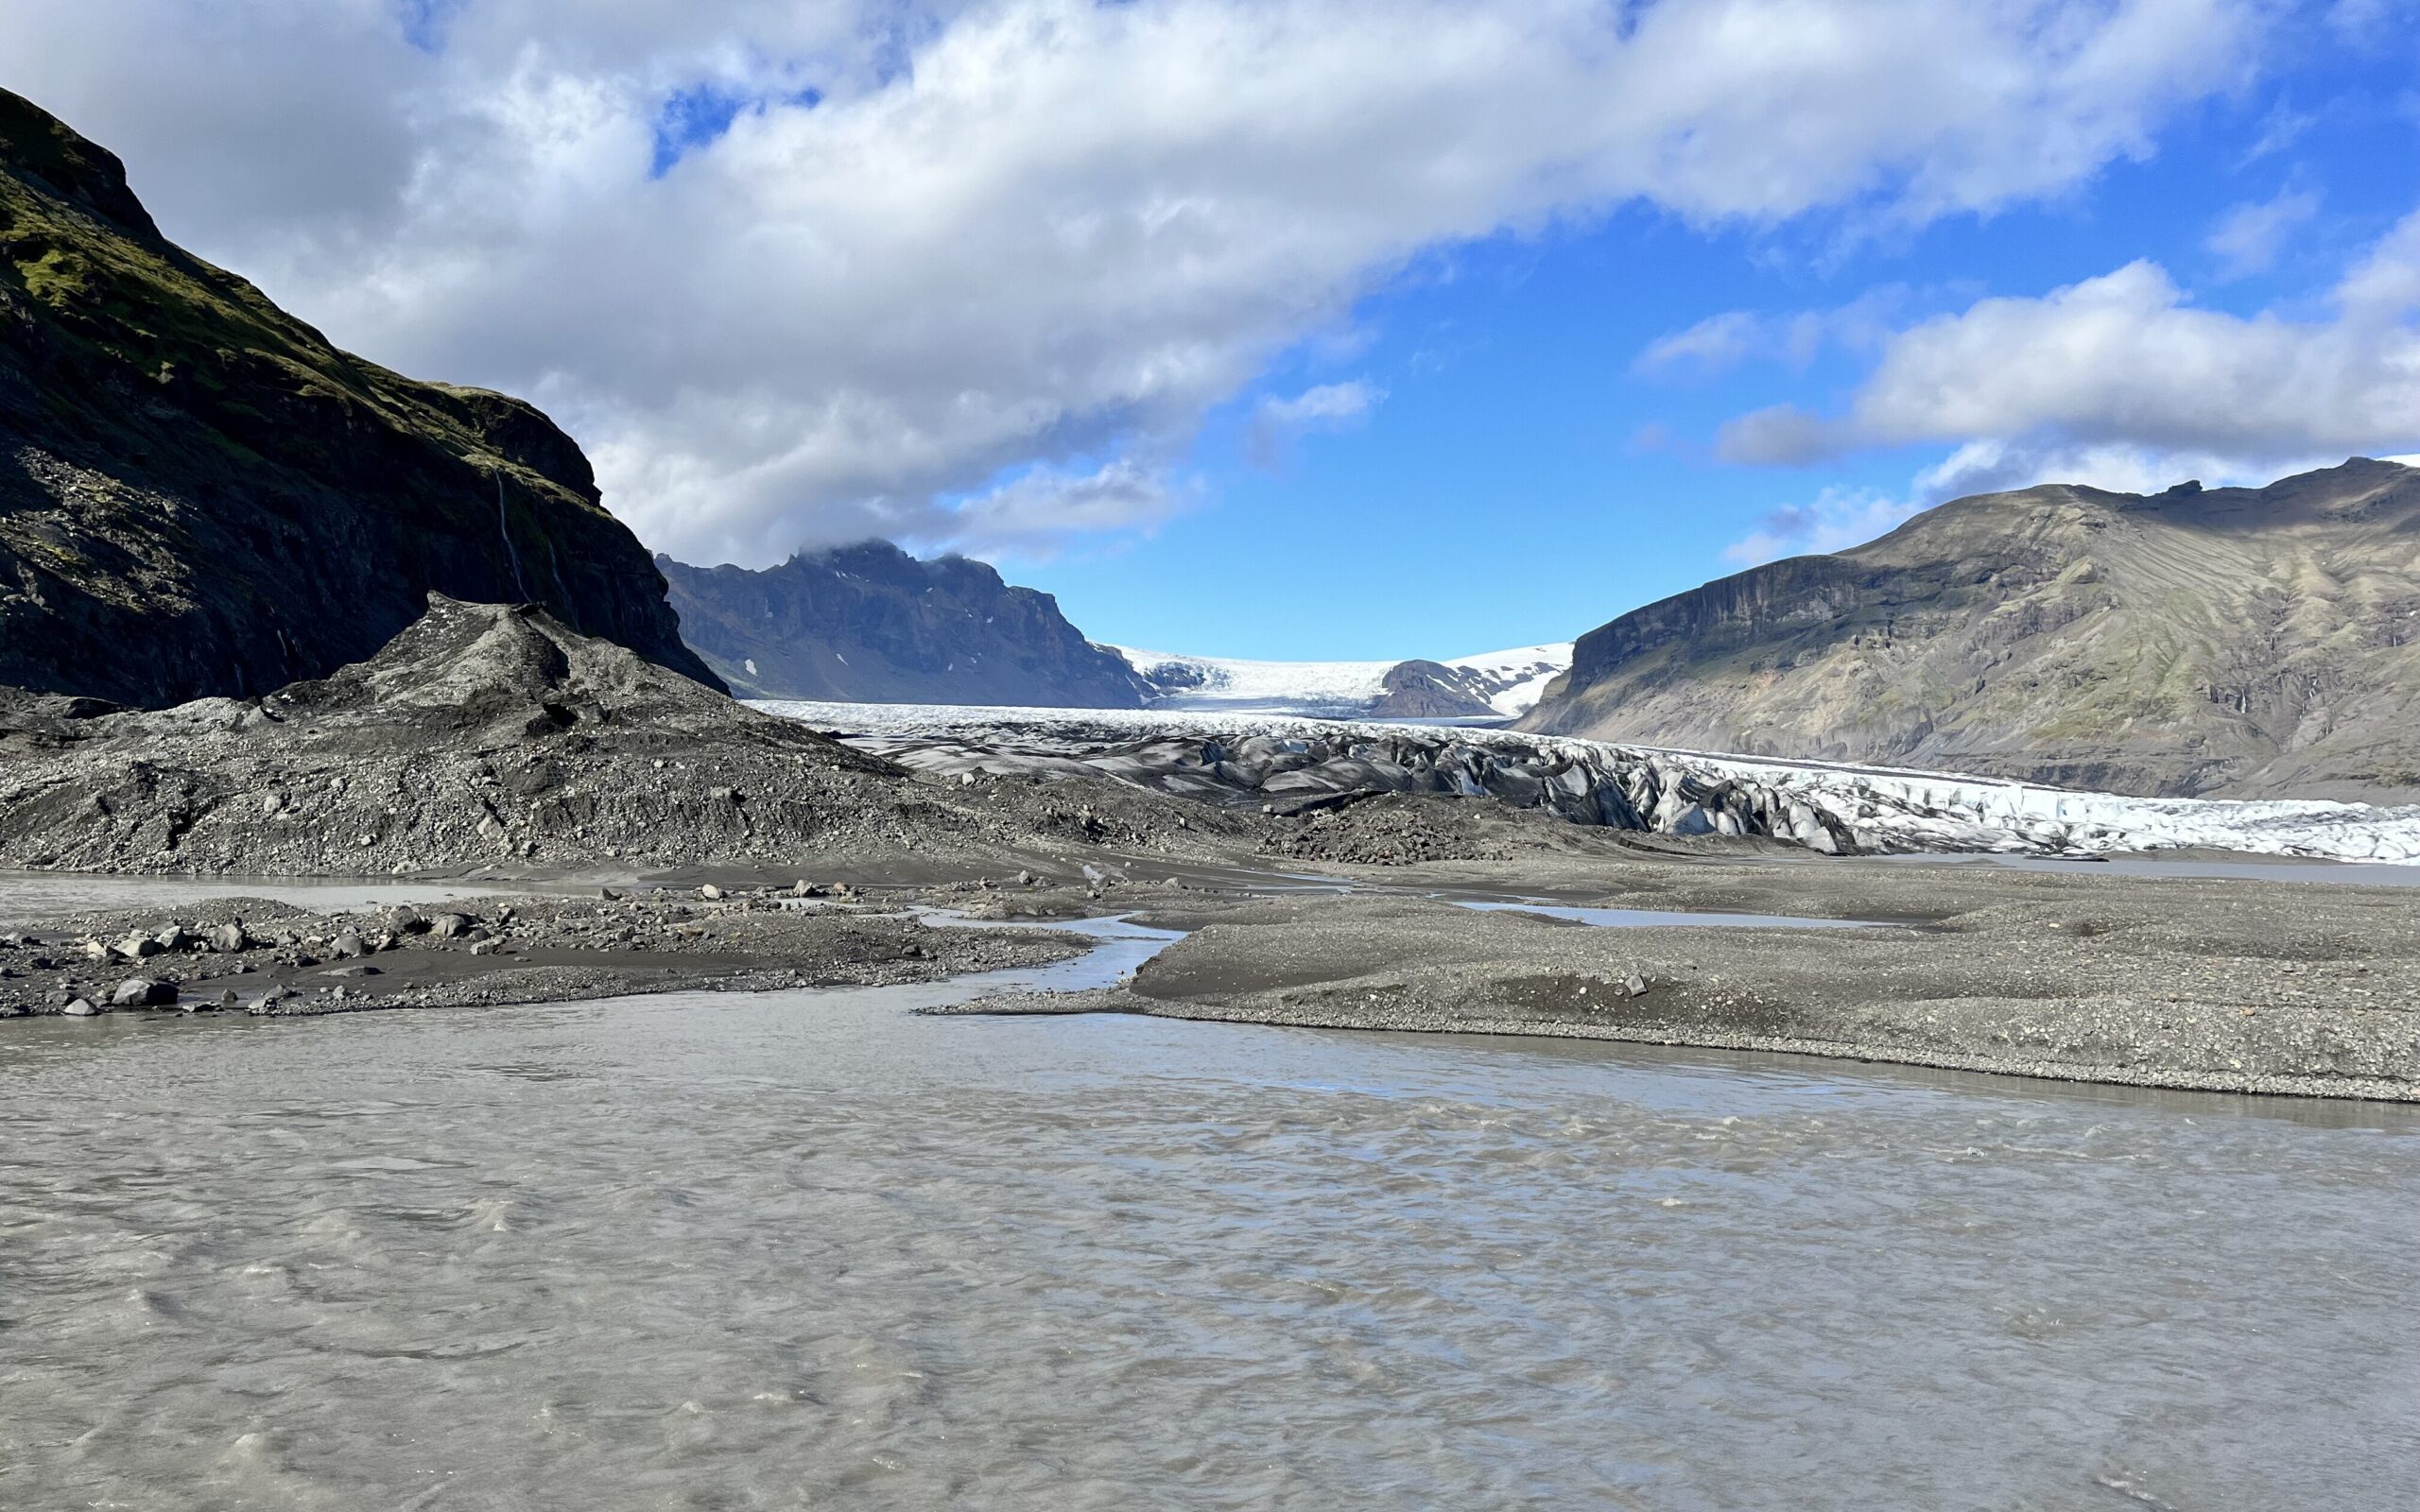 Gletsjer ved Skaftafell. Der er mange vandreture i området og campingpladsen er 20 minutters gang fra gletsjer.